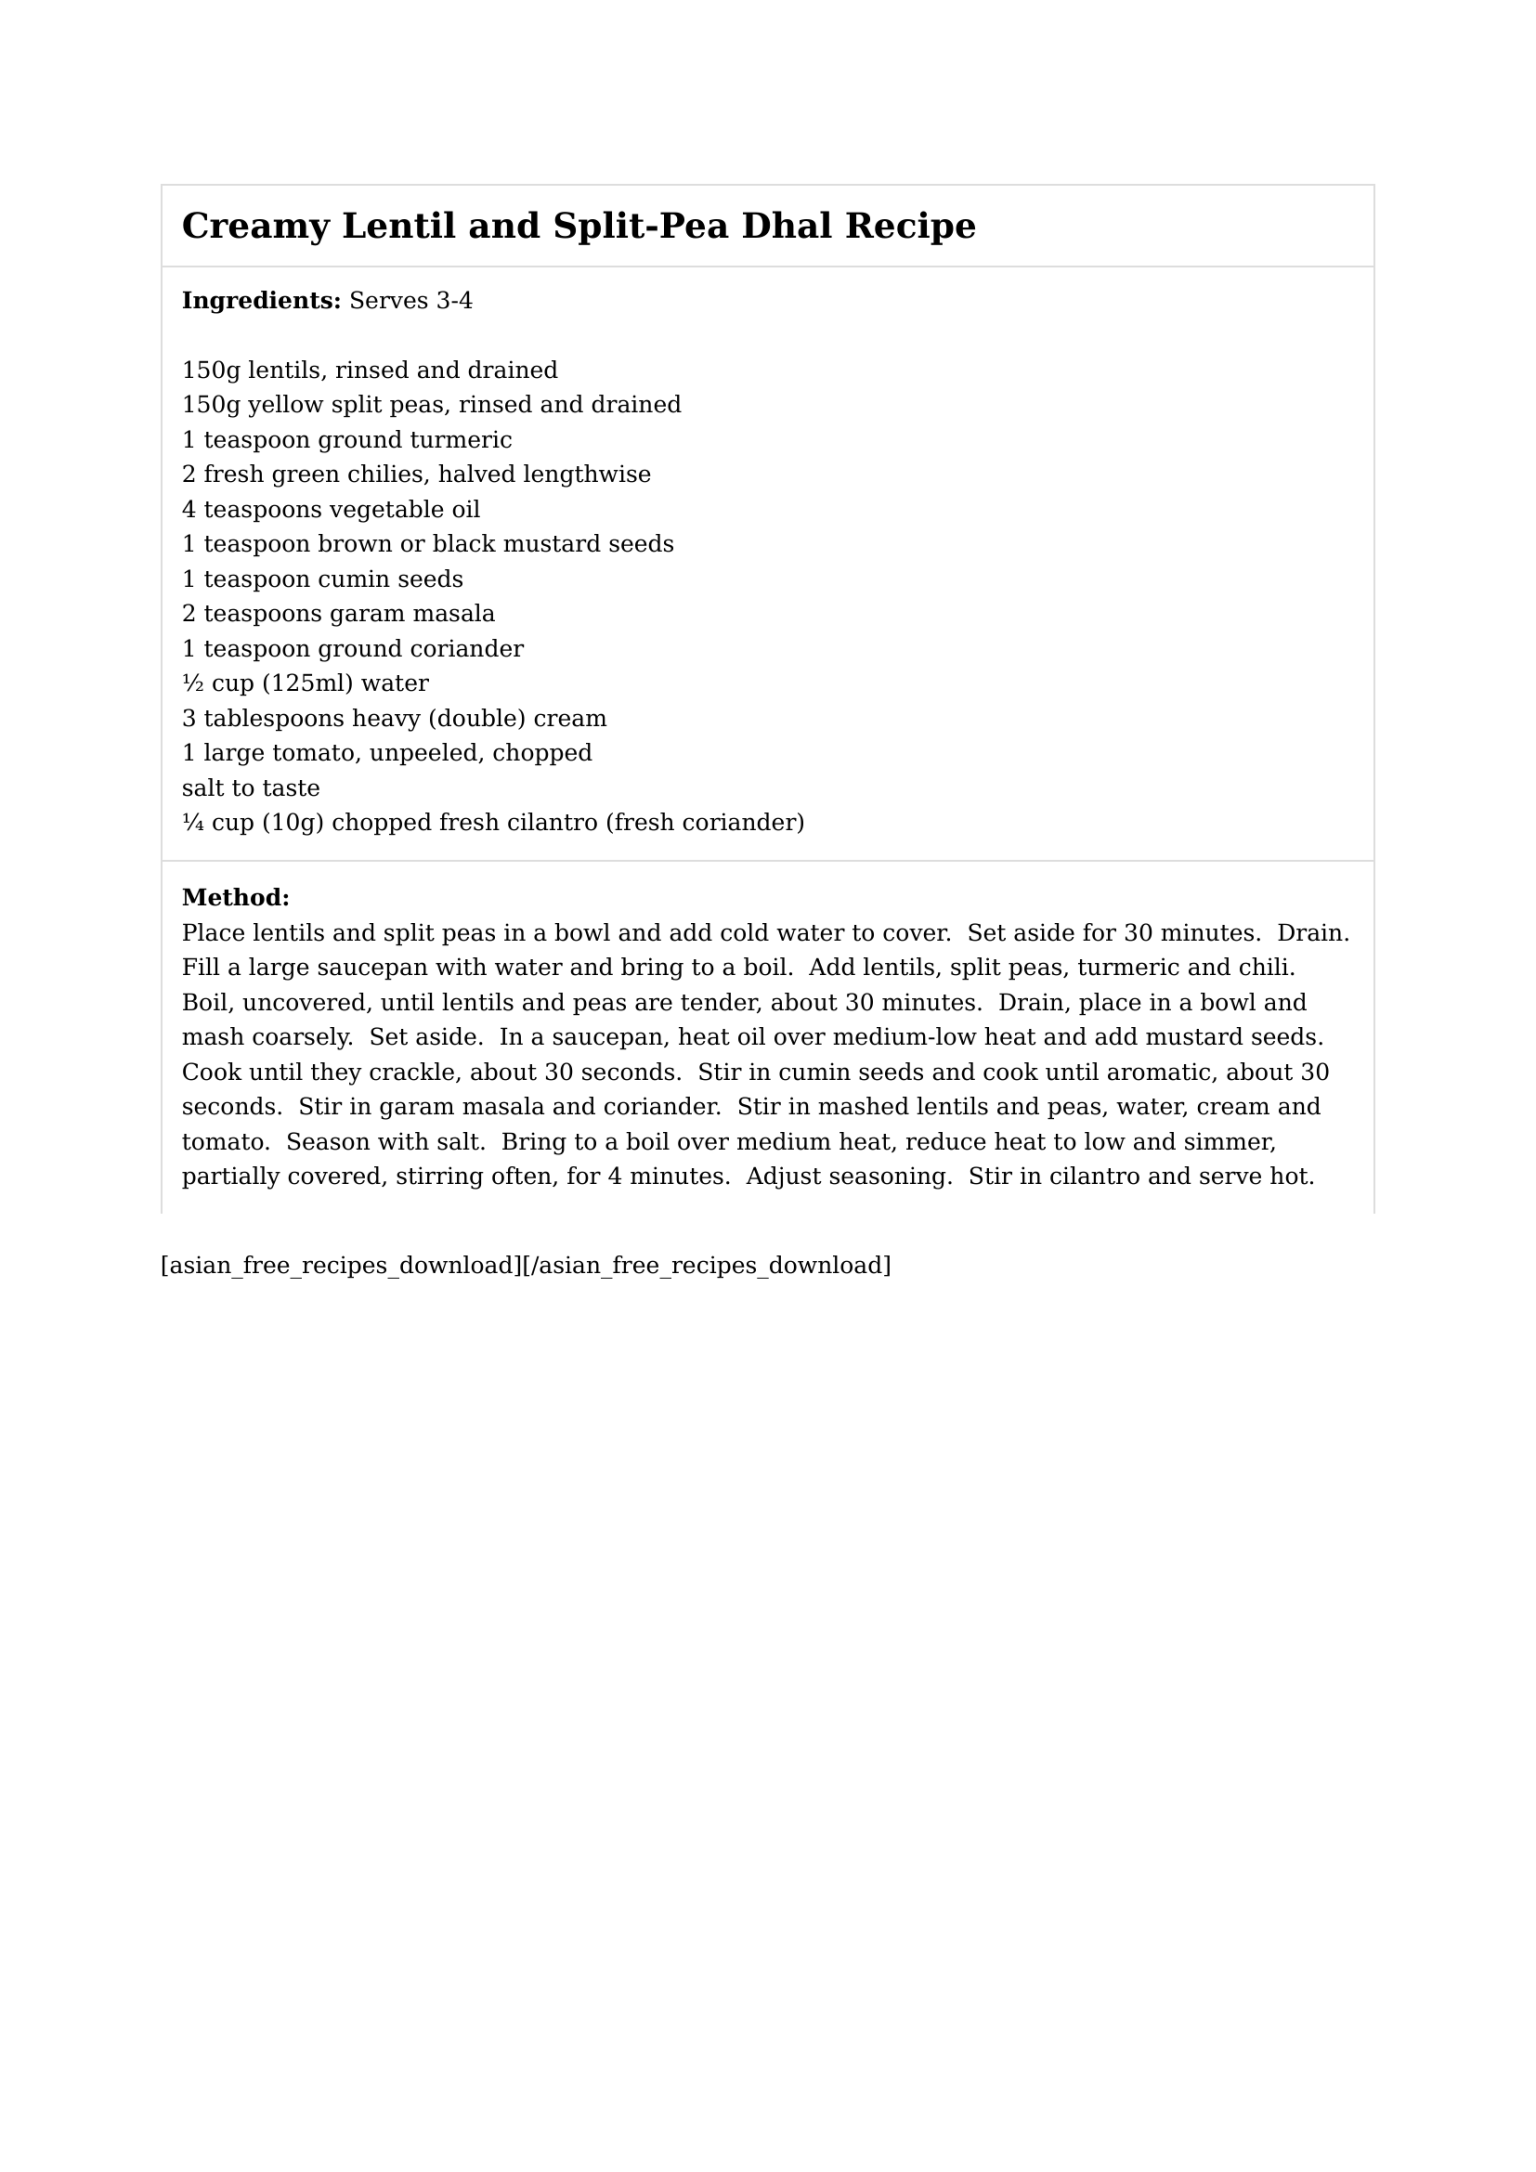 Creamy Lentil and Split-Pea Dhal Recipe